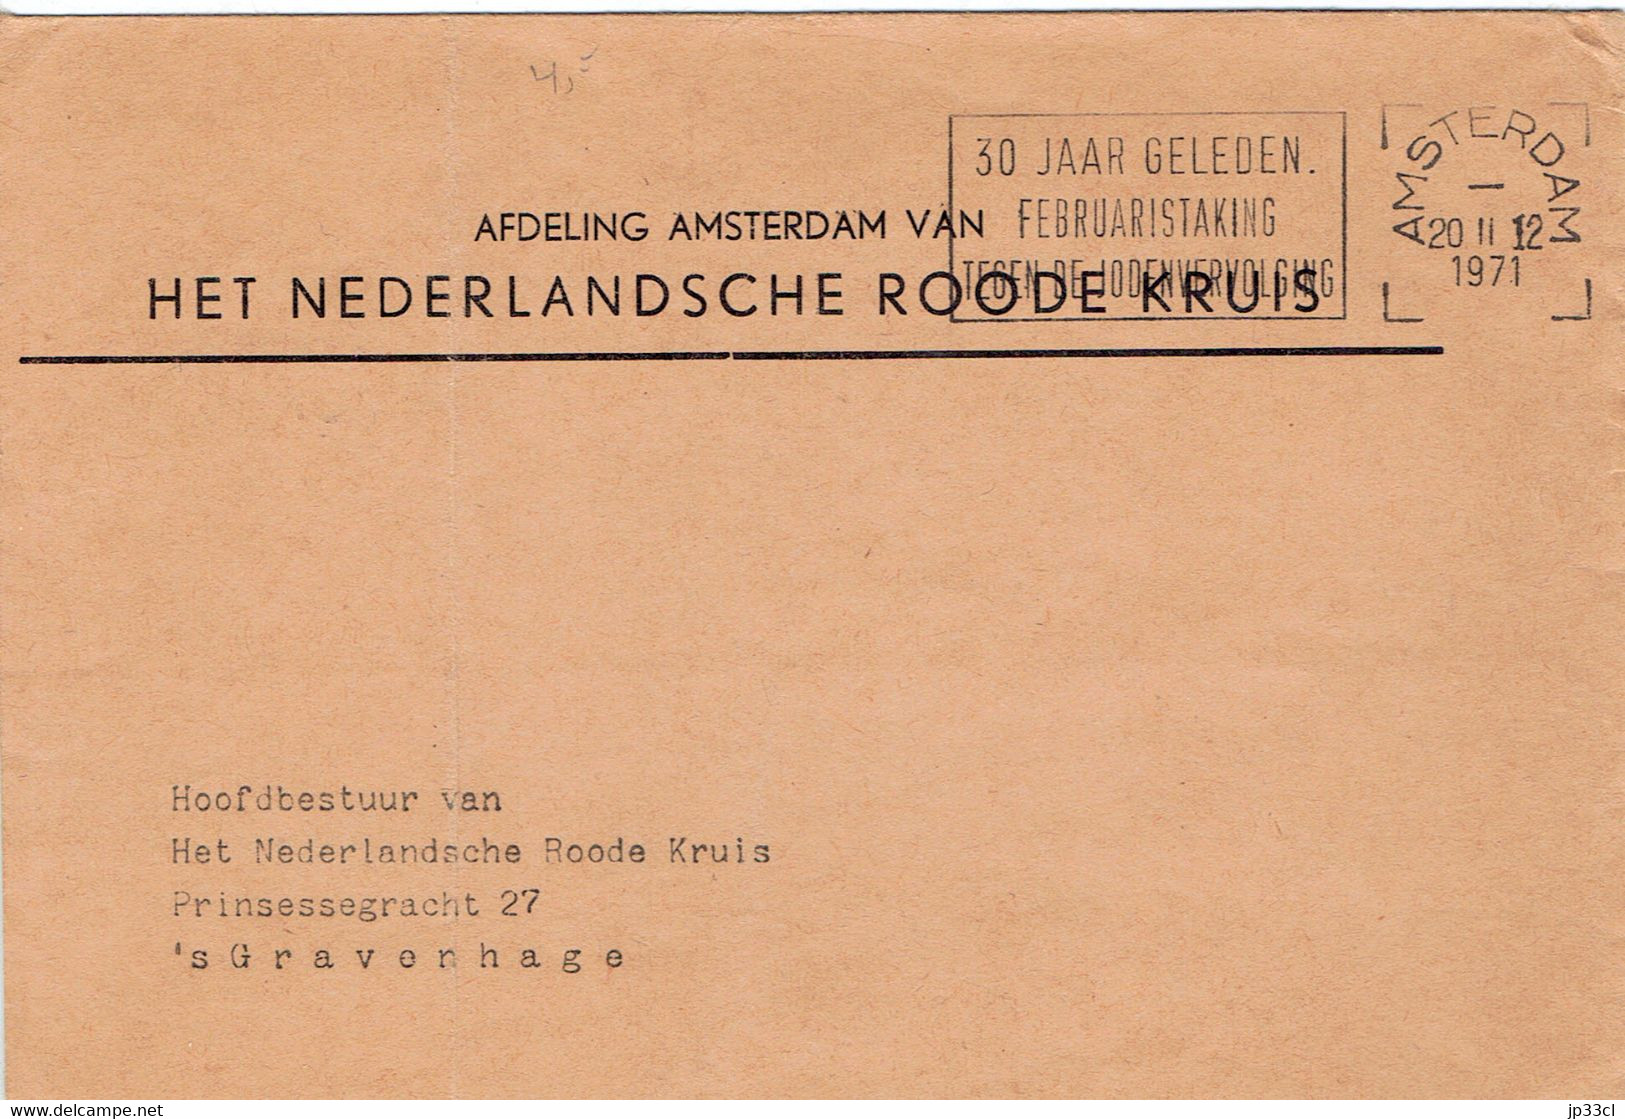 Judaïsme Croix Rouge Rode Kruis Stempel 30 Jaar Geleden Februaristaking Tegen De Jodenvervolging, Amsterdam 20/2/1971 - Machines à Affranchir (EMA)